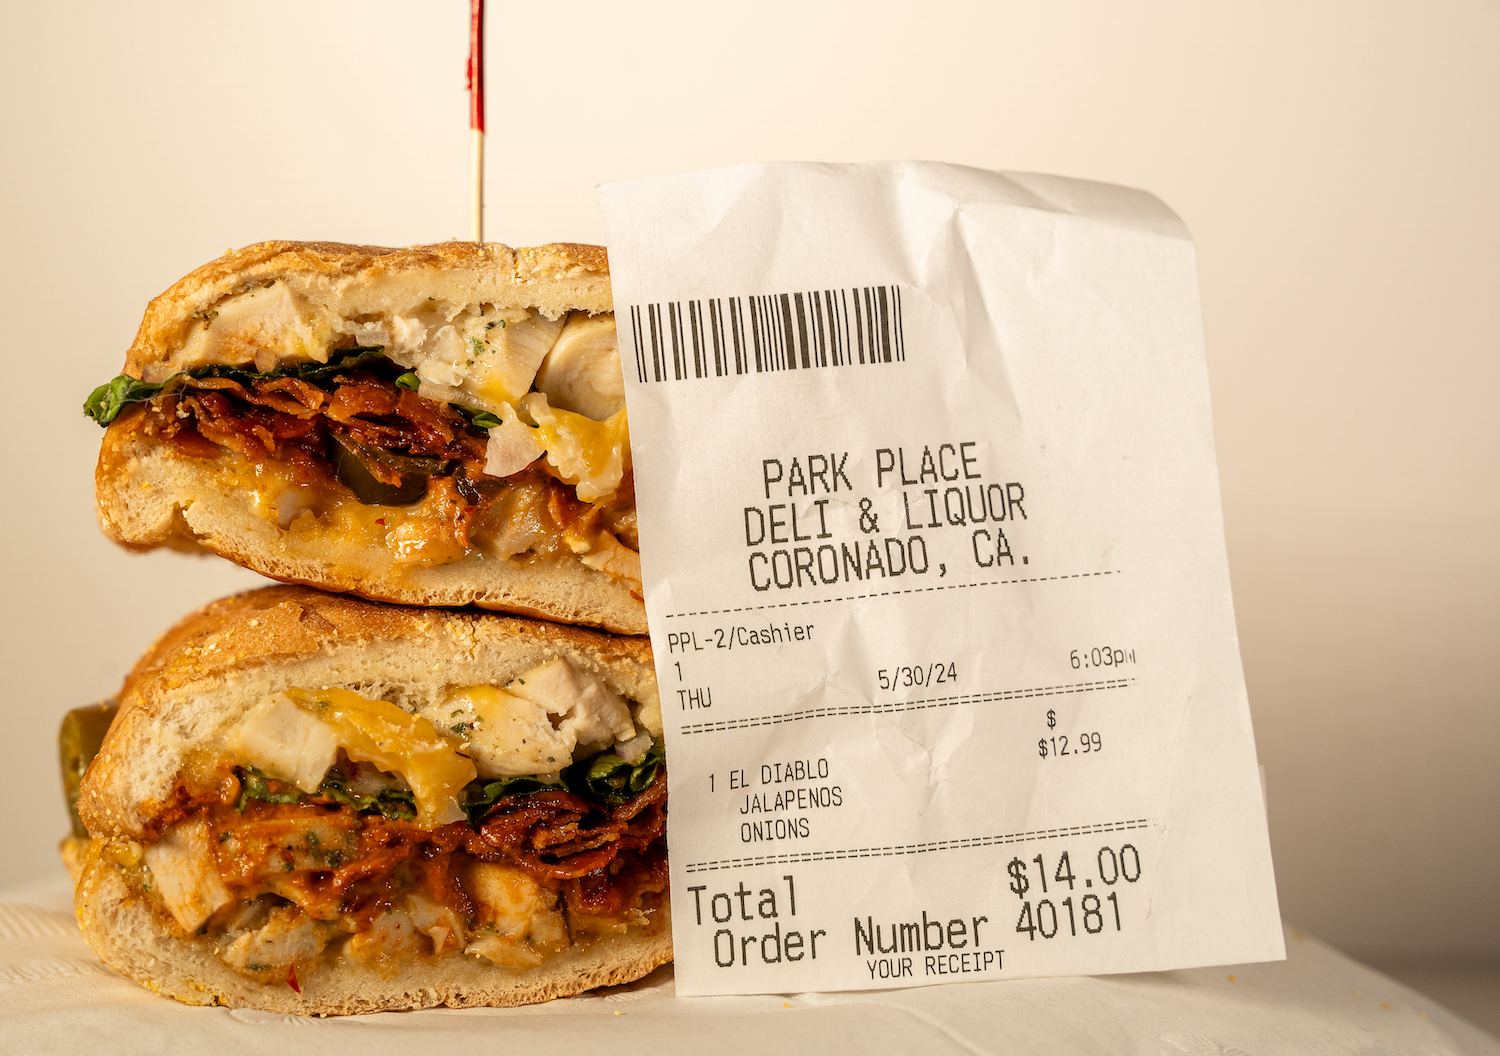 Best liquor store sandwiches in San Diego featuring the El Diablo sandwich from Park Place Liquor in Coronado